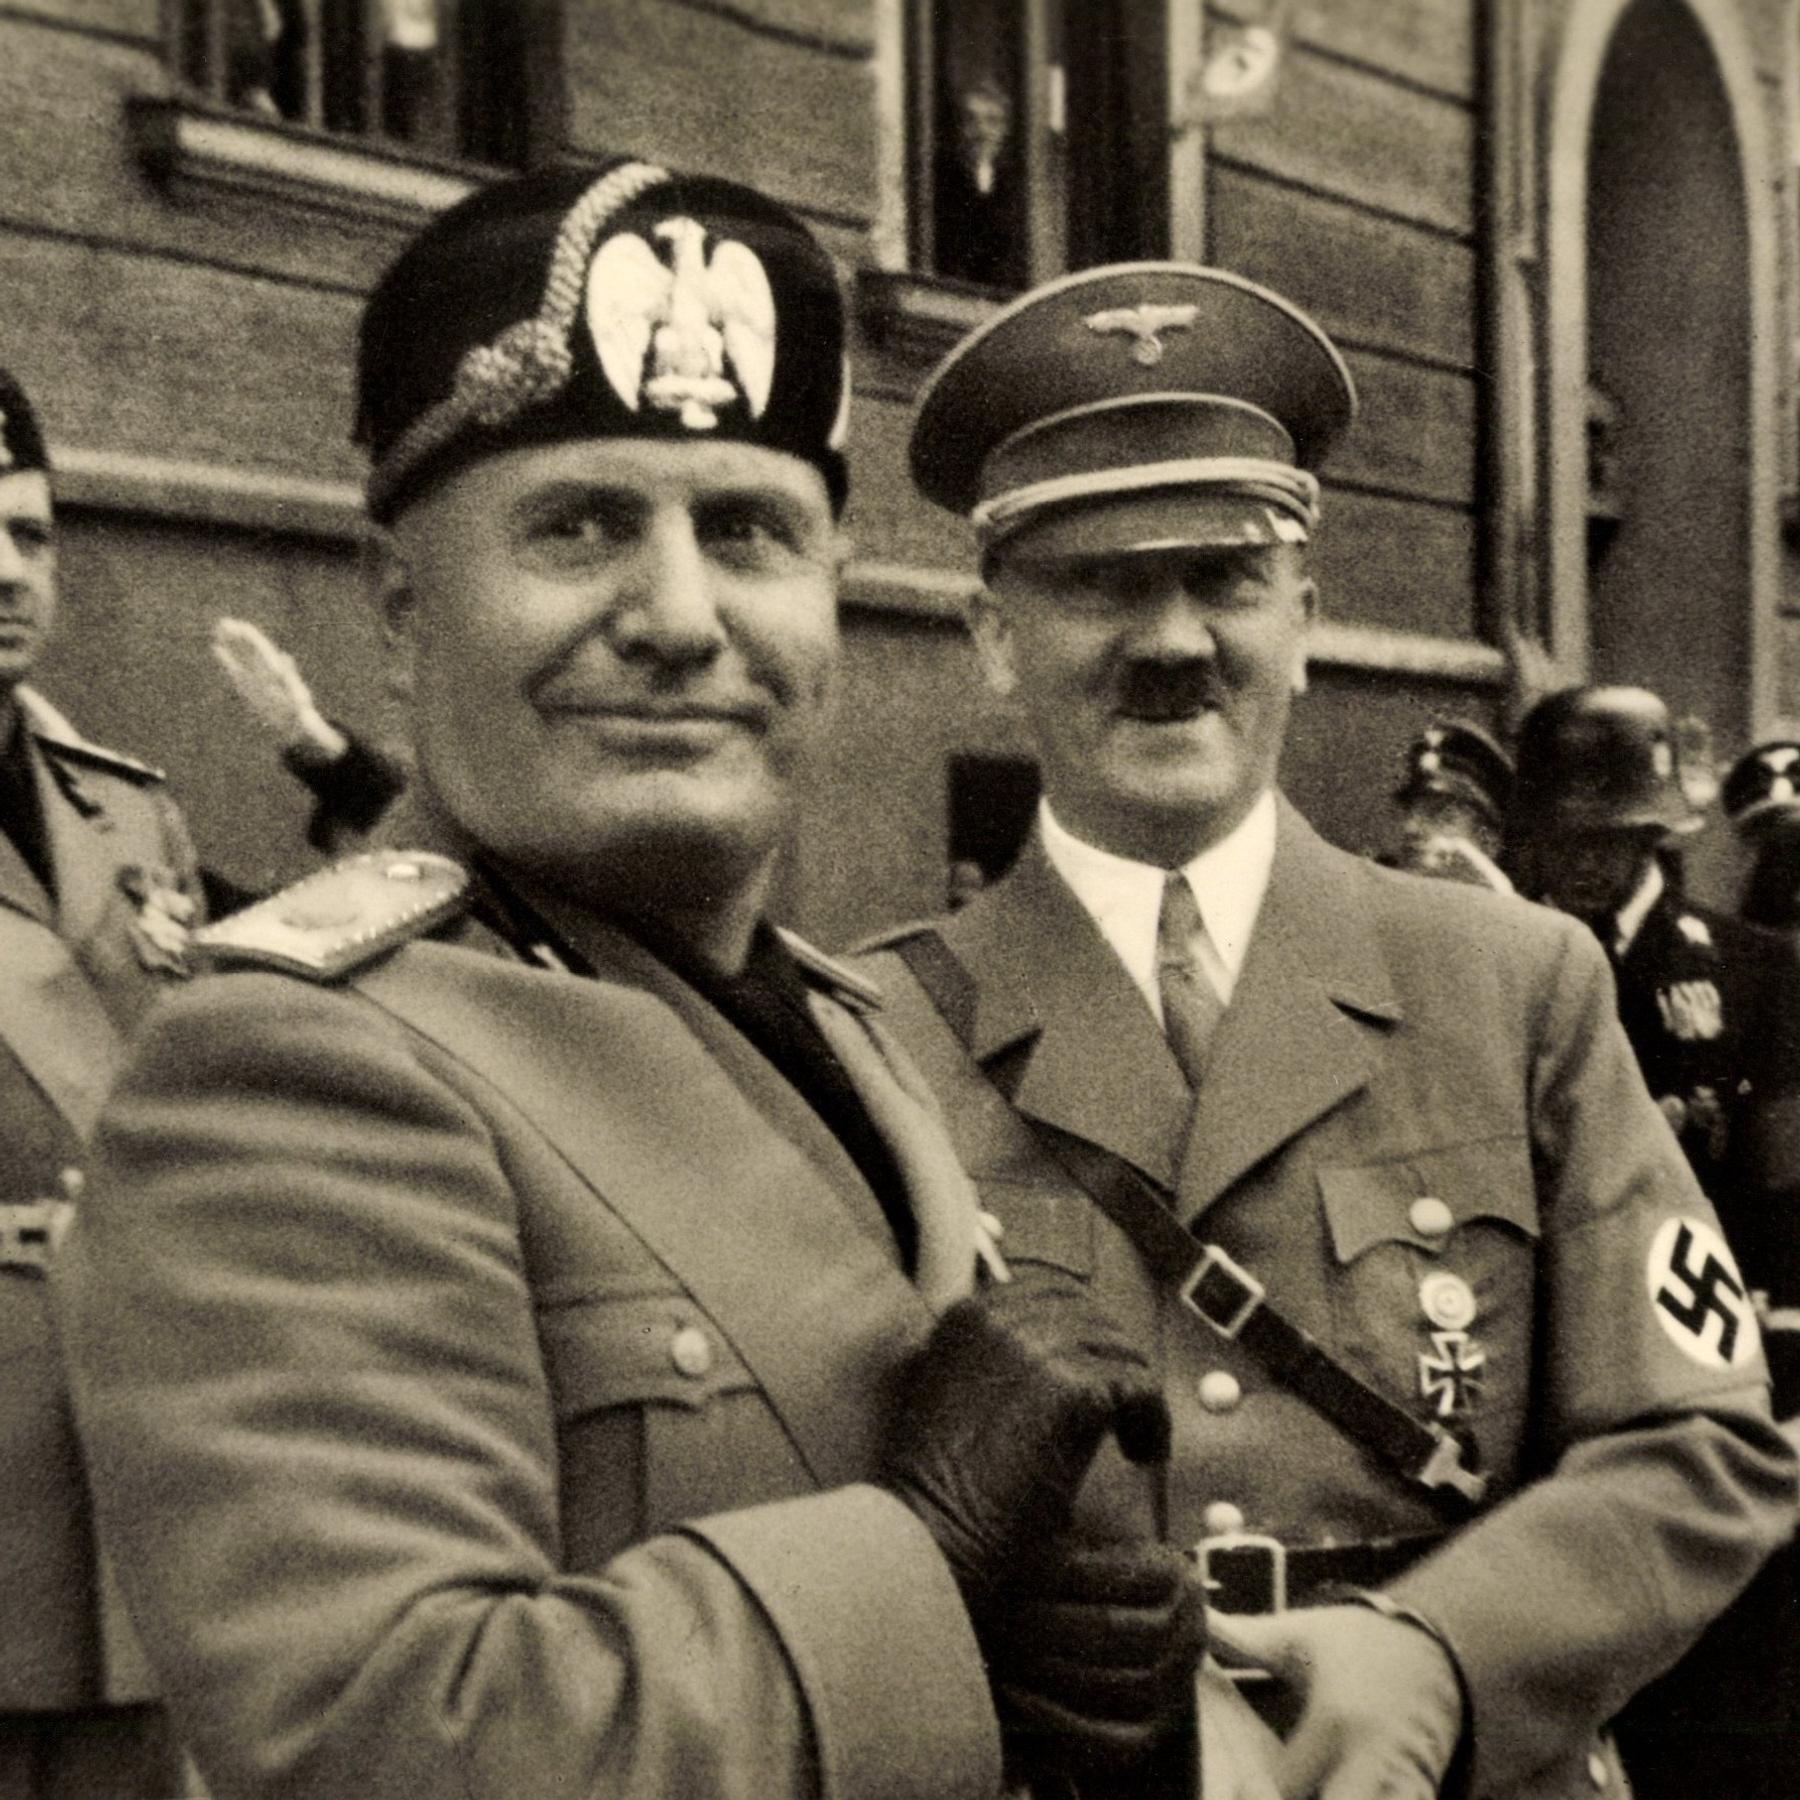 Die Republik von Salò - Hitlers Marionetten-Regime in Oberitalien